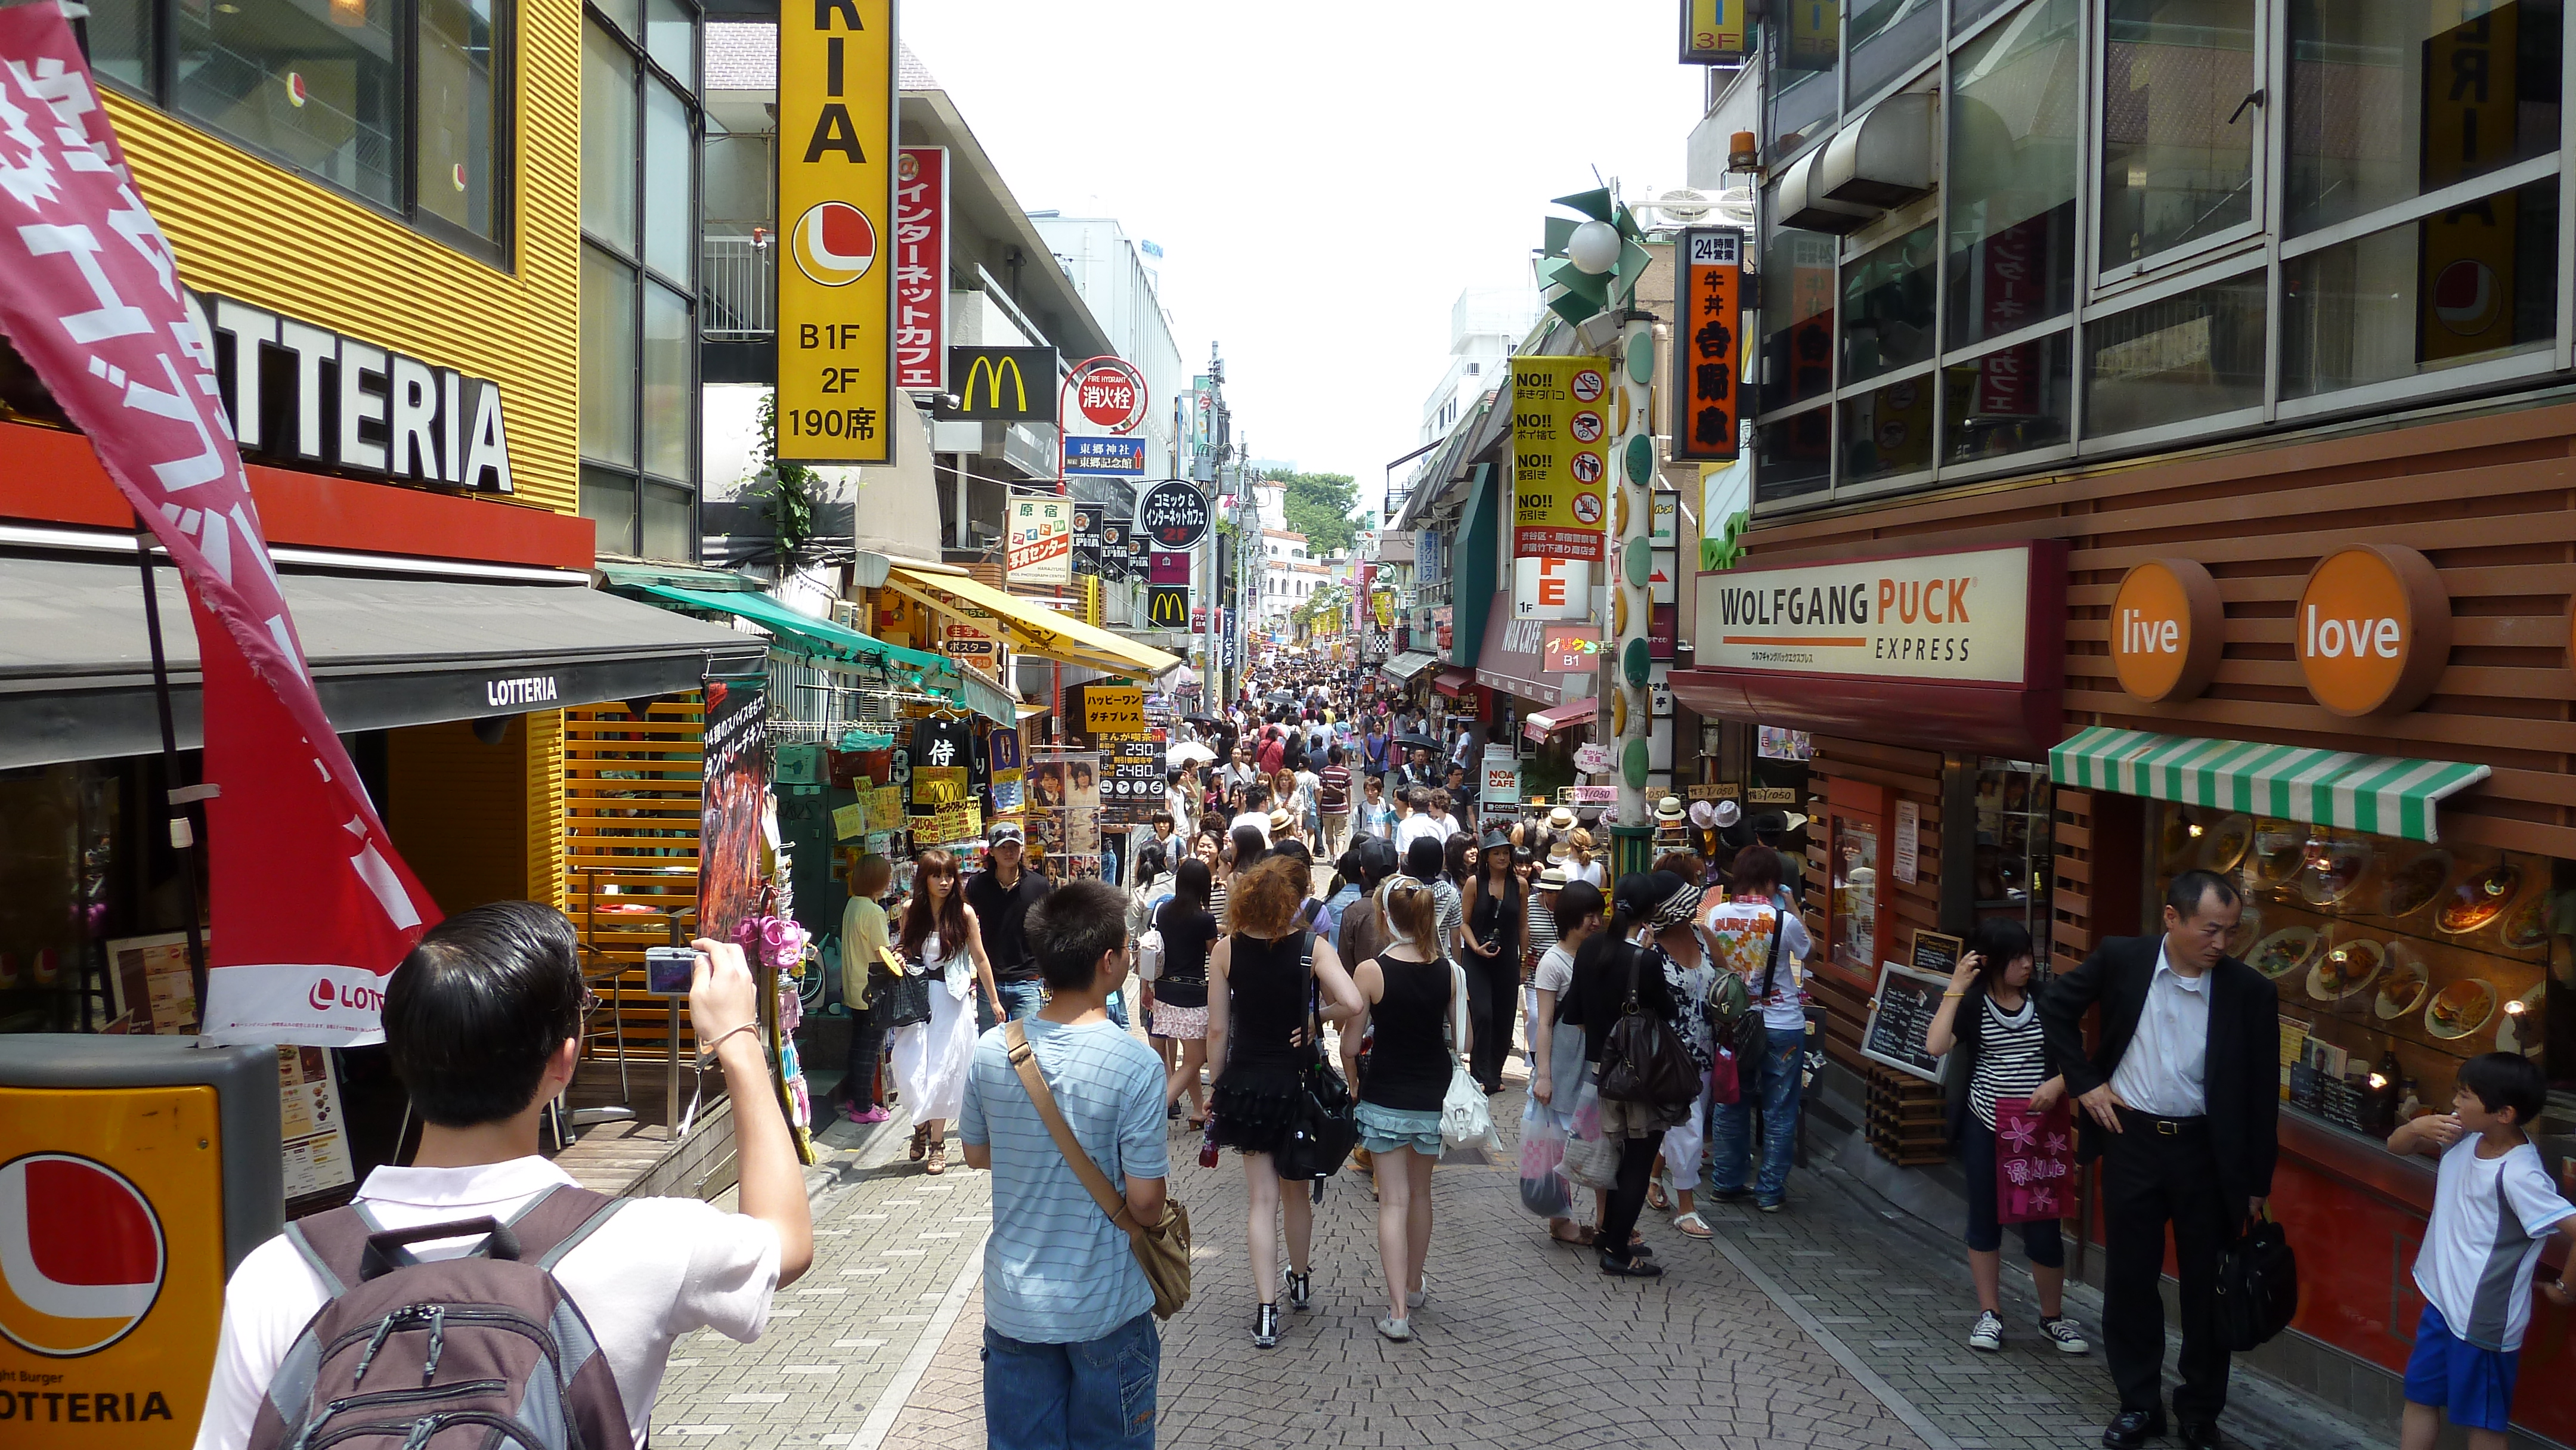 Takeshita-Dori, gaten for japansk ungdomsmote